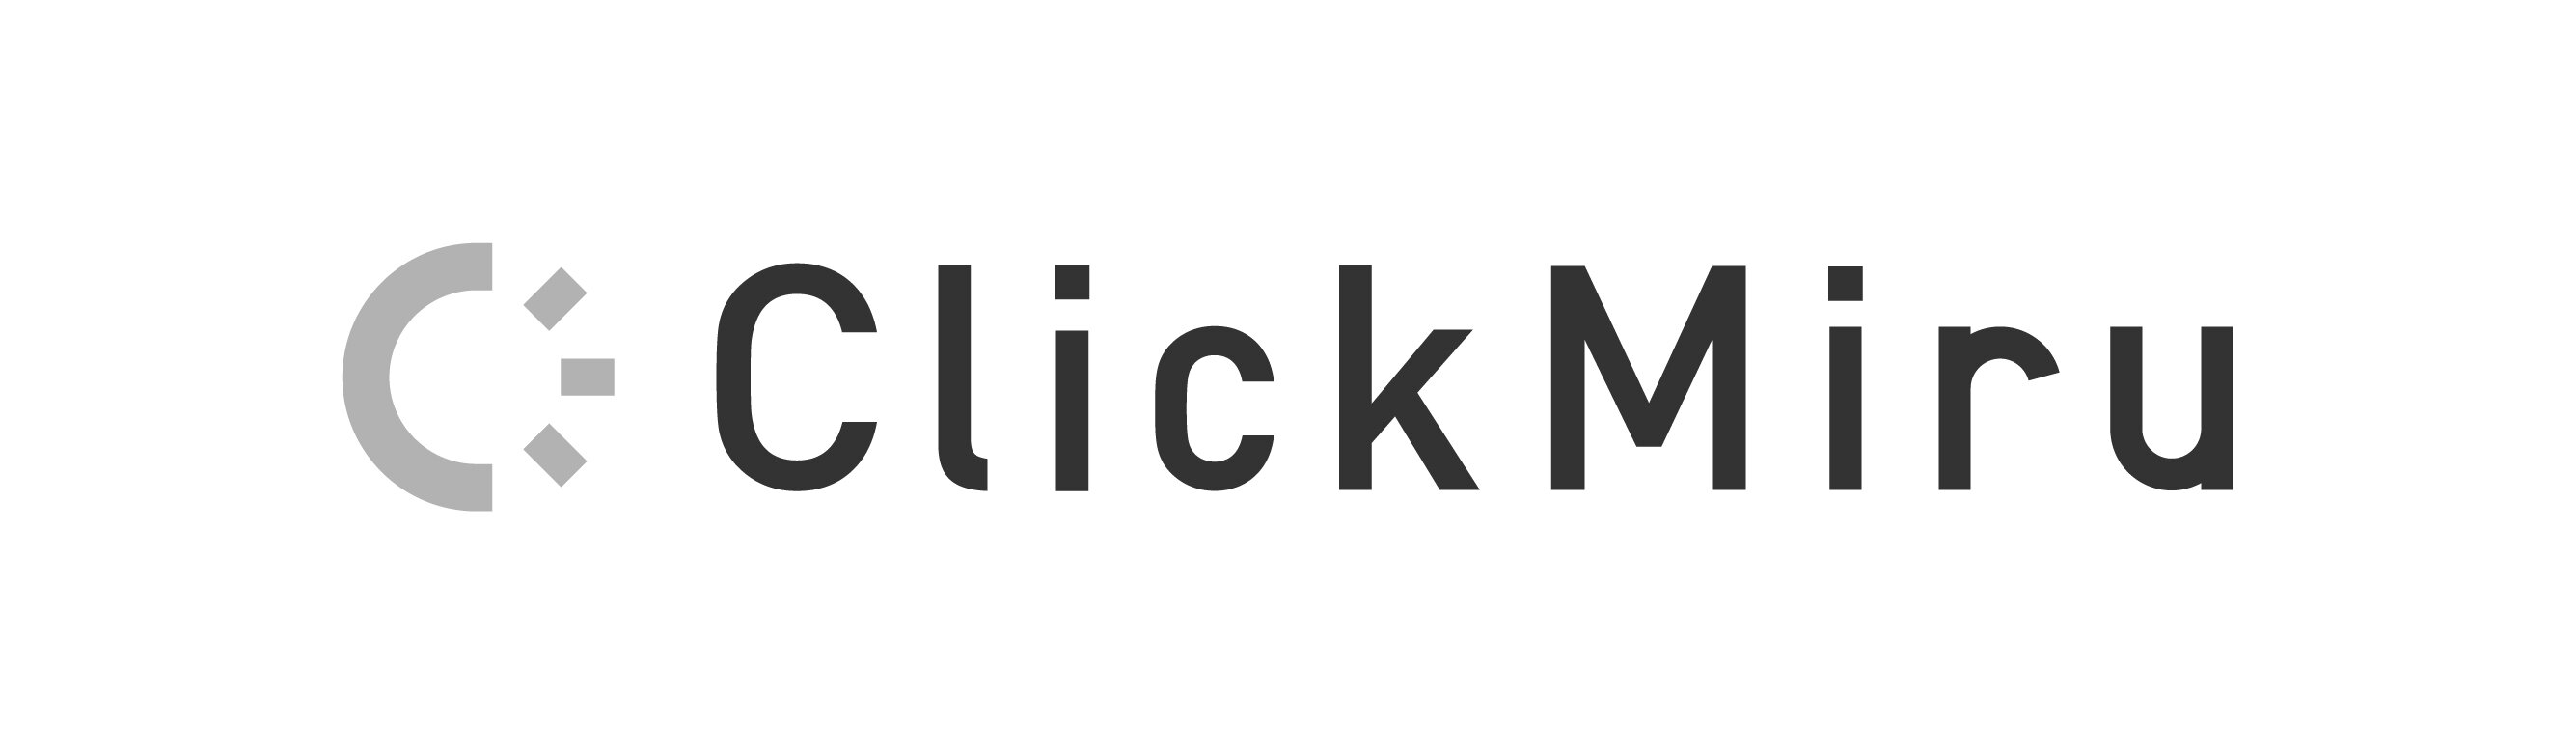 ClickMiru_iconロゴ（原則こちらを使用）.jpg